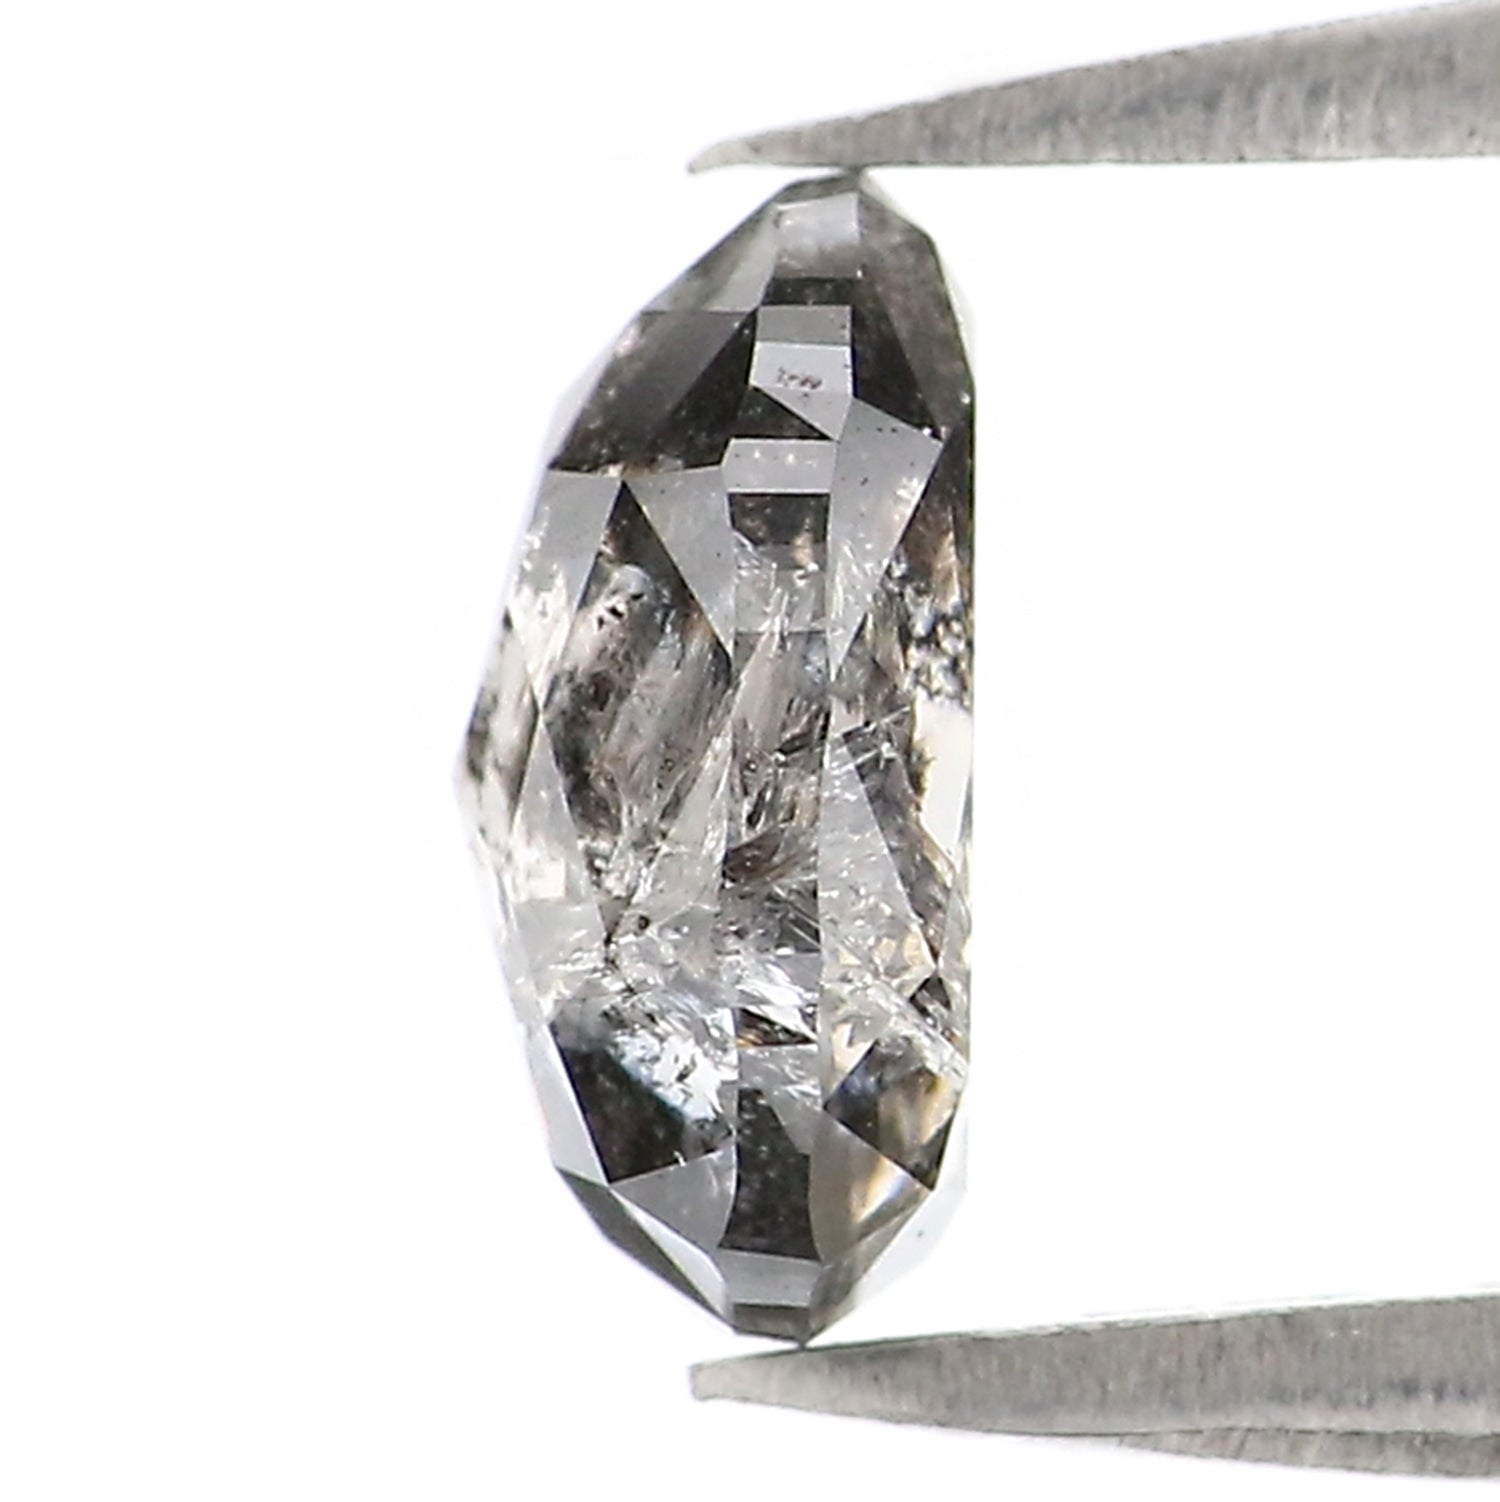 0.97 Ct Natural Loose Oval Shape Diamond Black Grey Color Oval Cut Diamond 7.10 MM Natural Loose Salt and Pepper Oval Shape Diamond QL9588